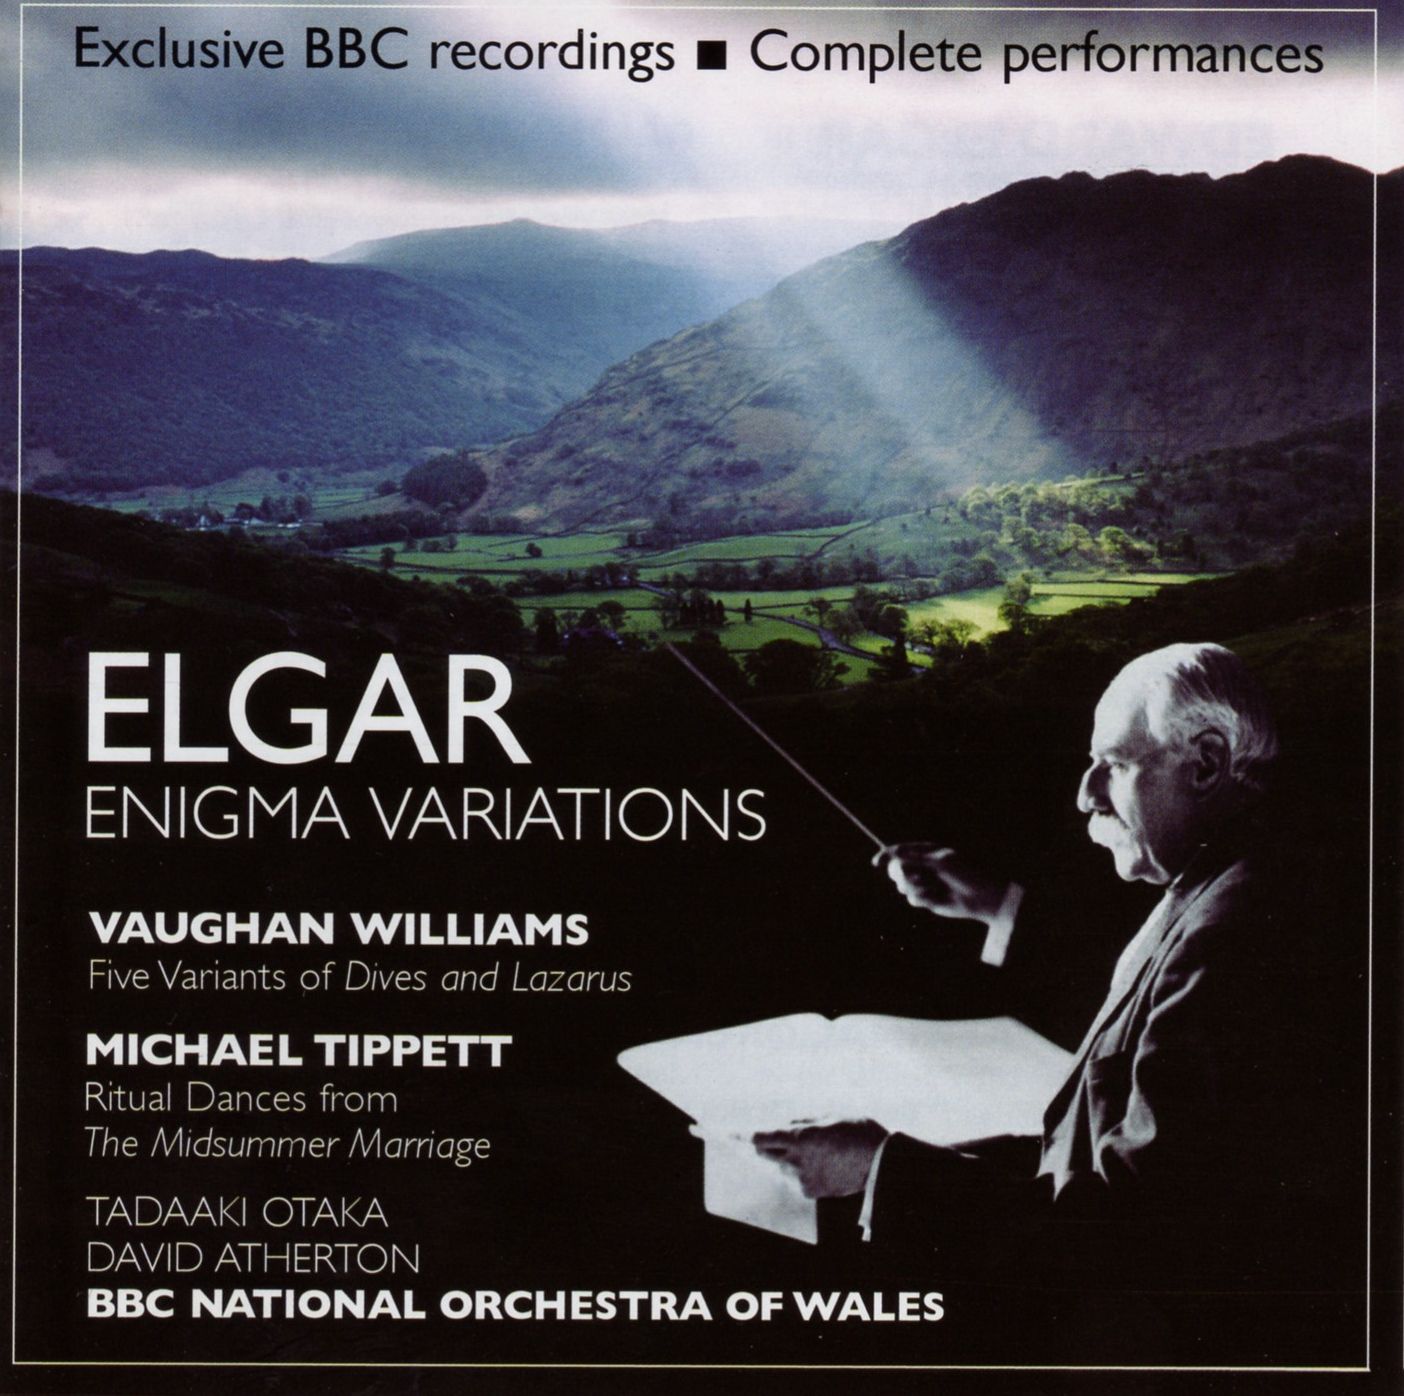 Elgar, Williams and Tippett